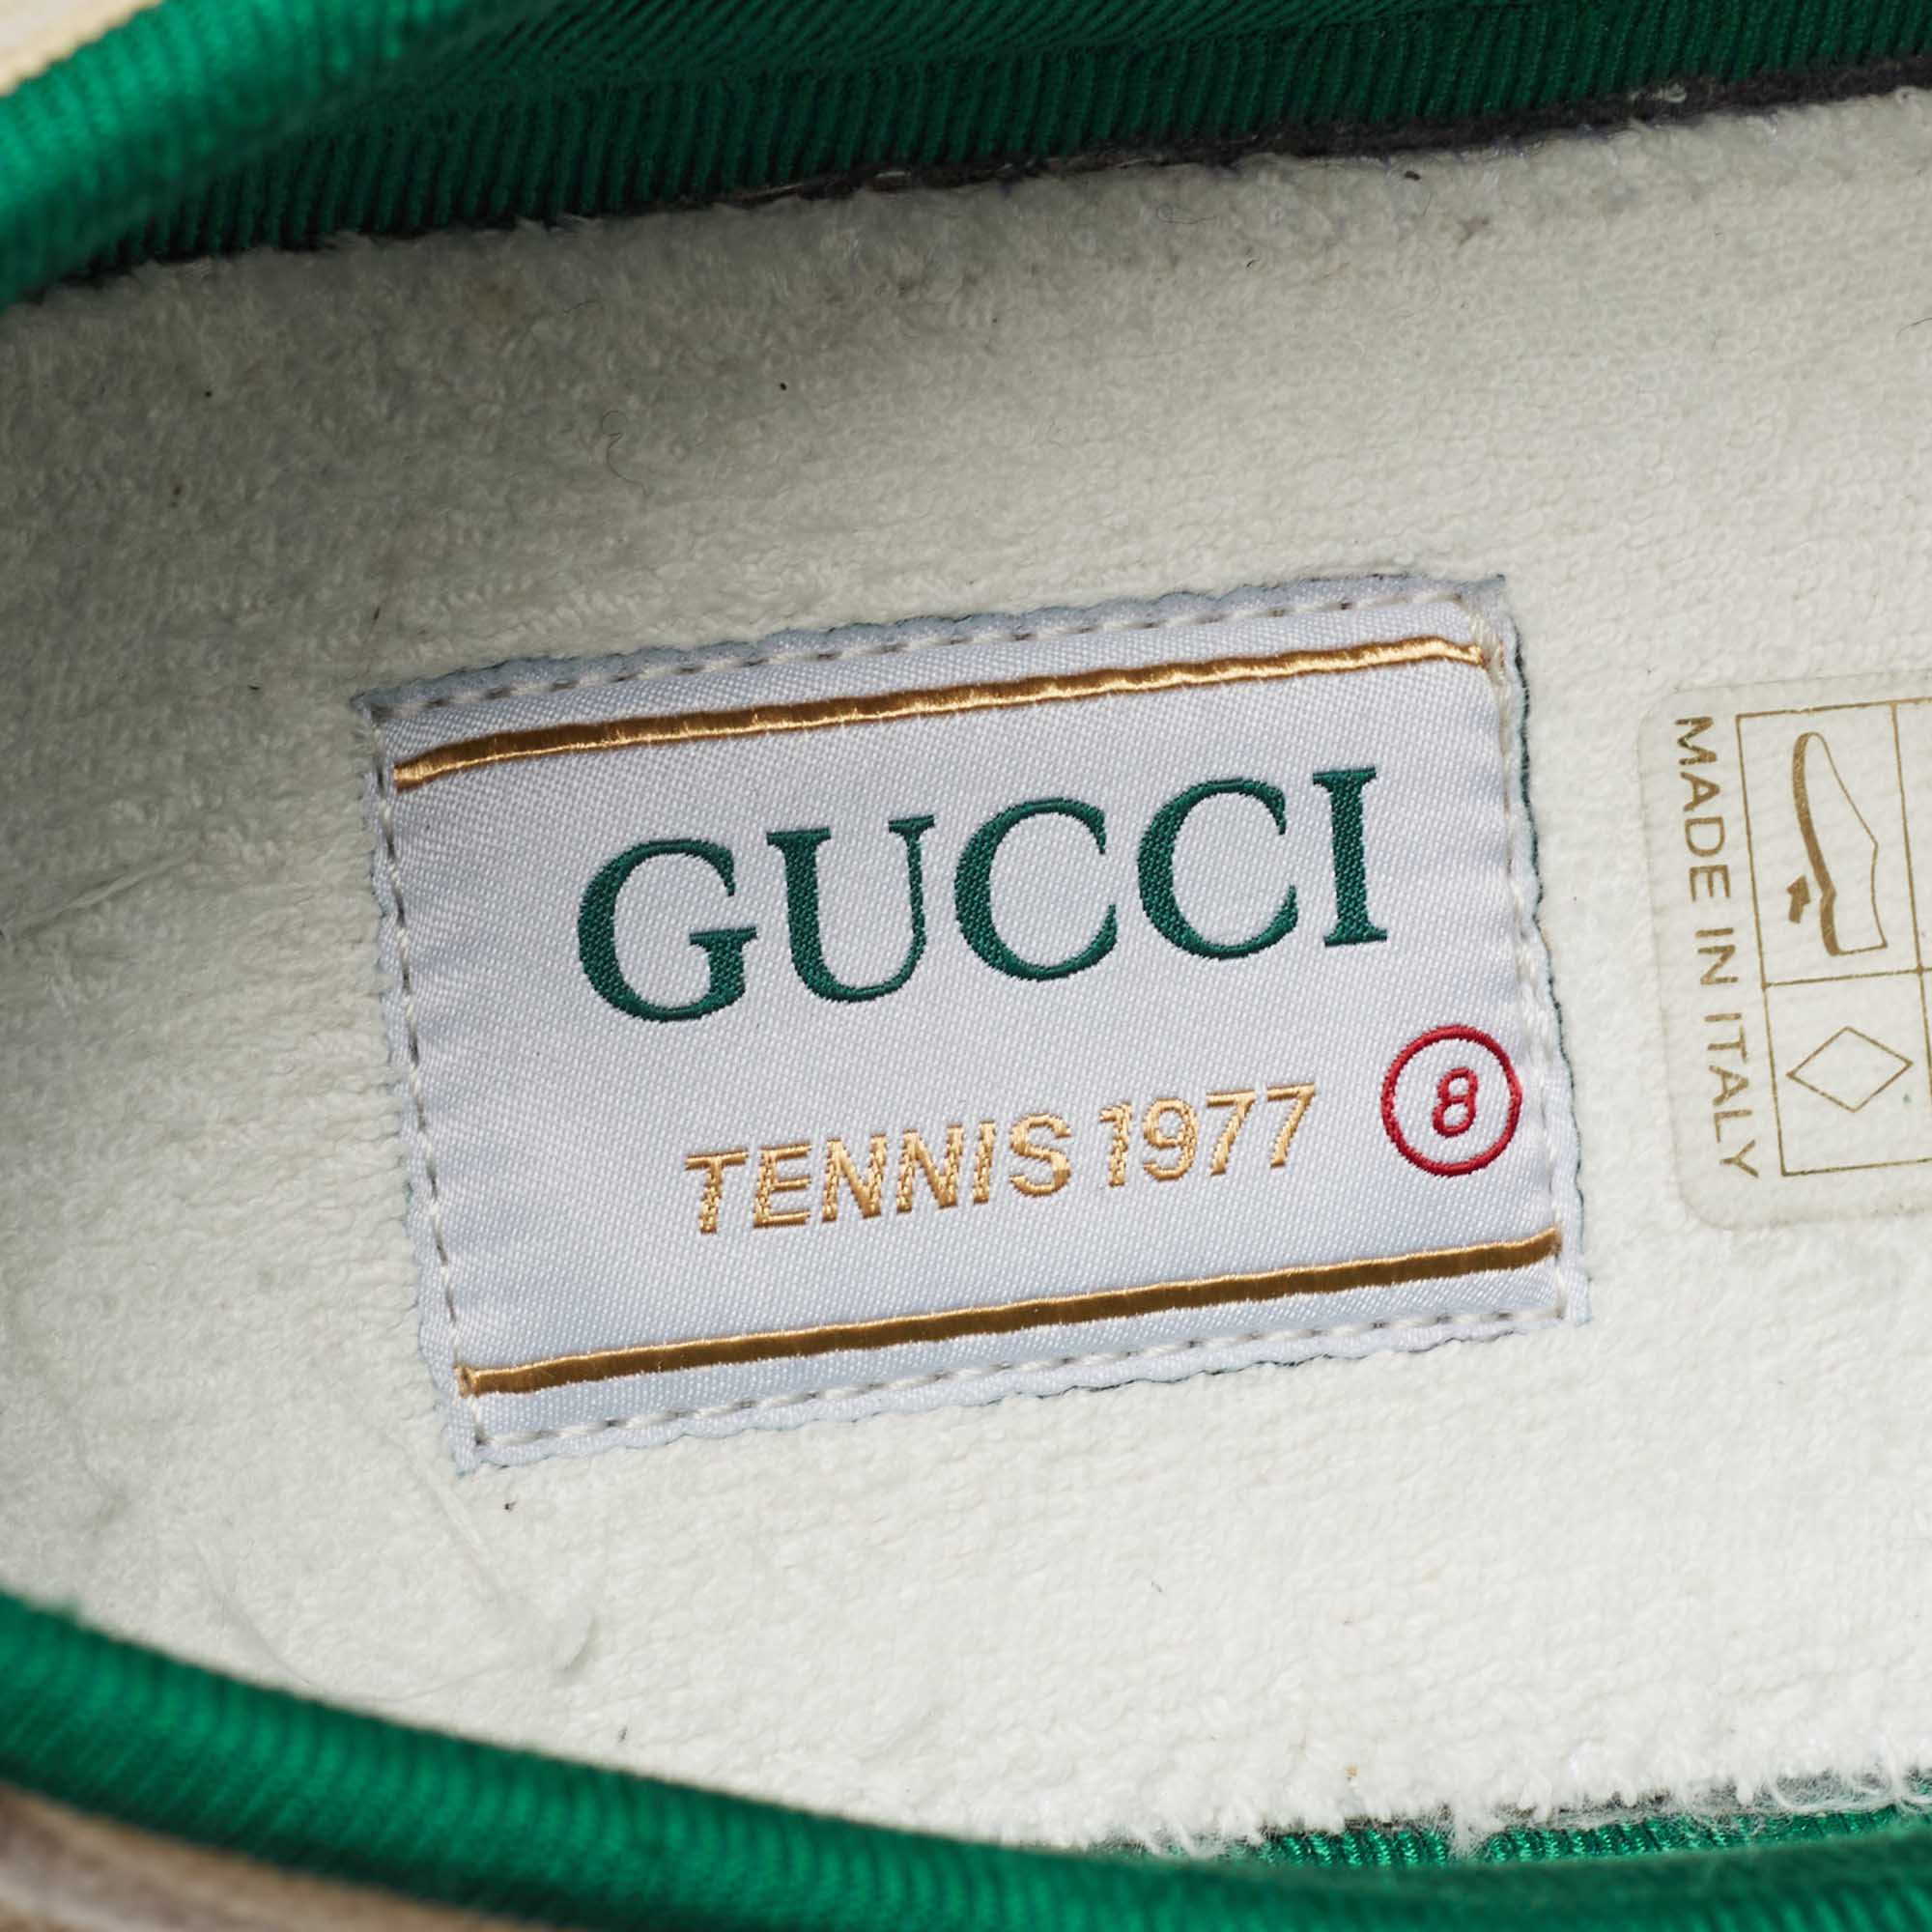 Gucci Cream Canvas Tennis 1977 Sneakers Size 42